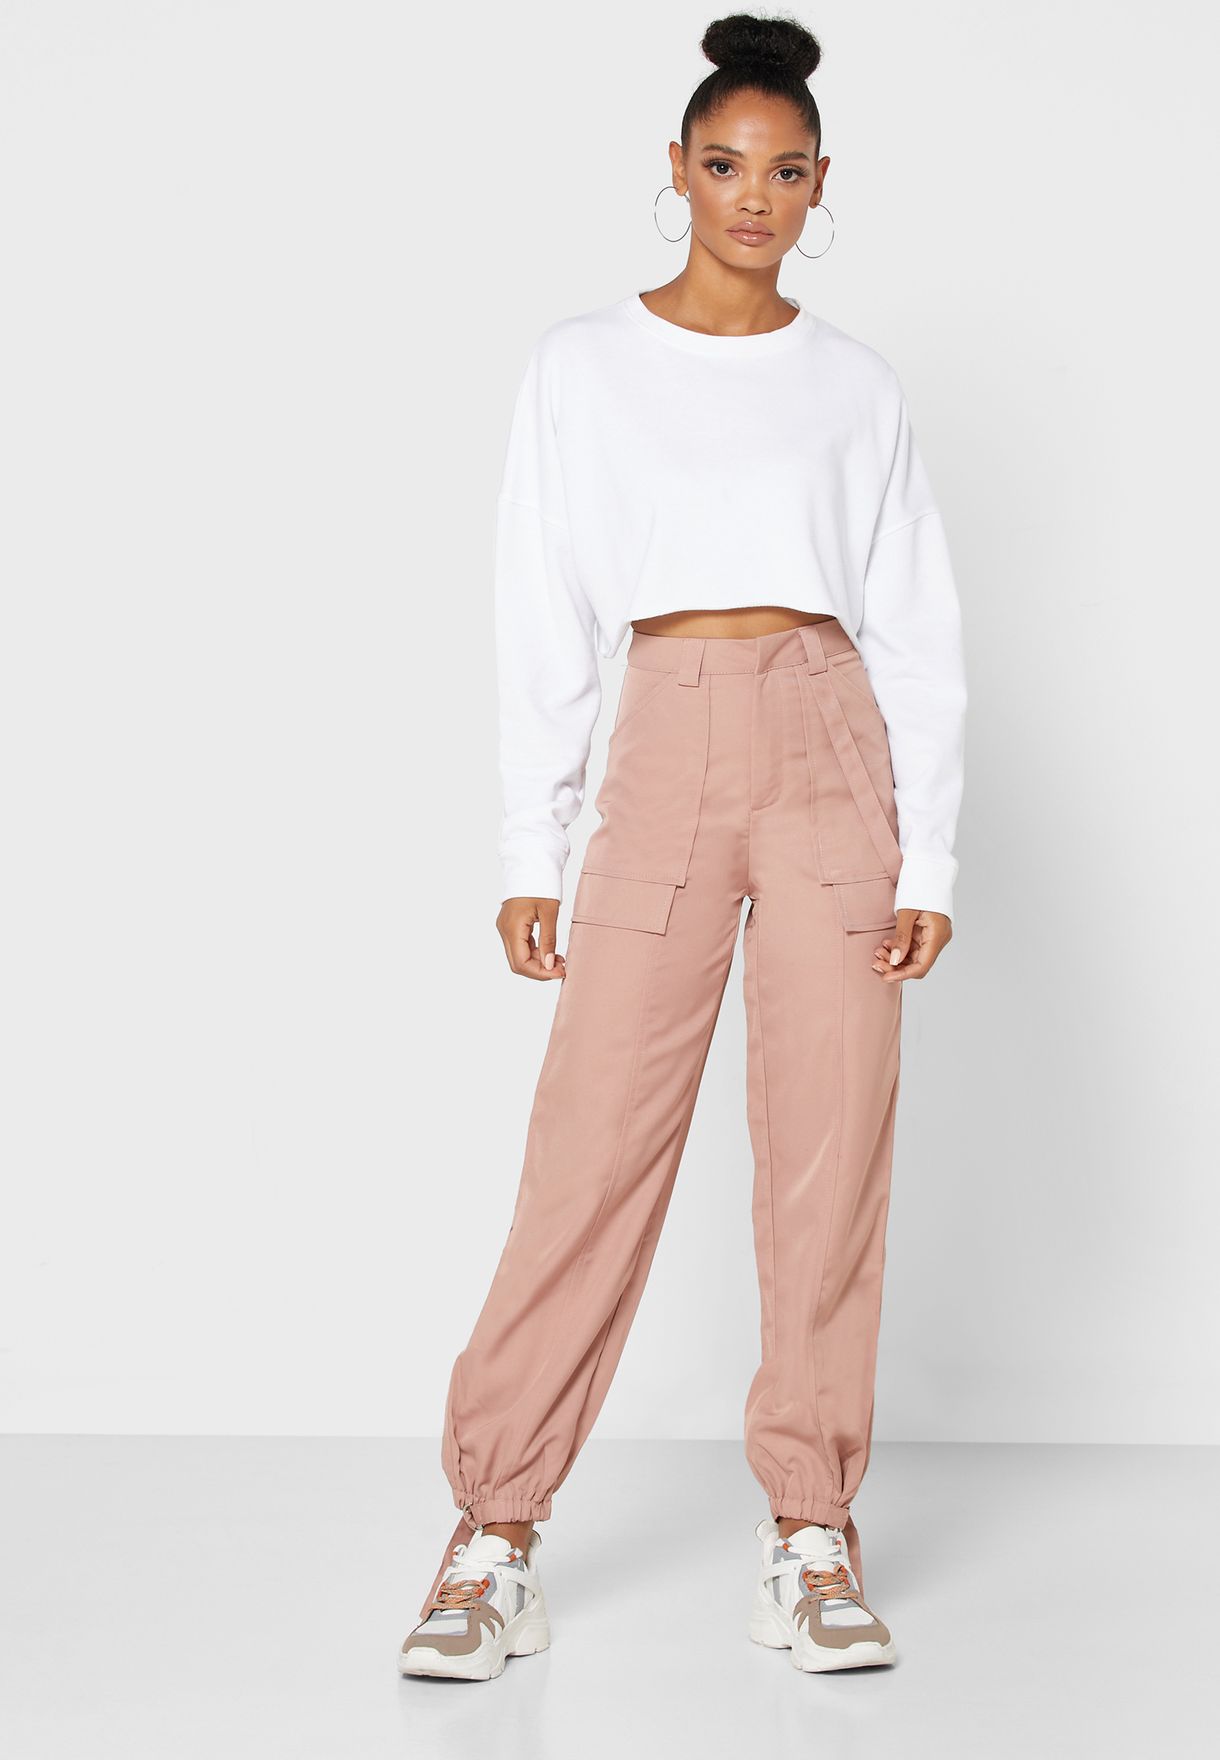 pink cargo pants womens